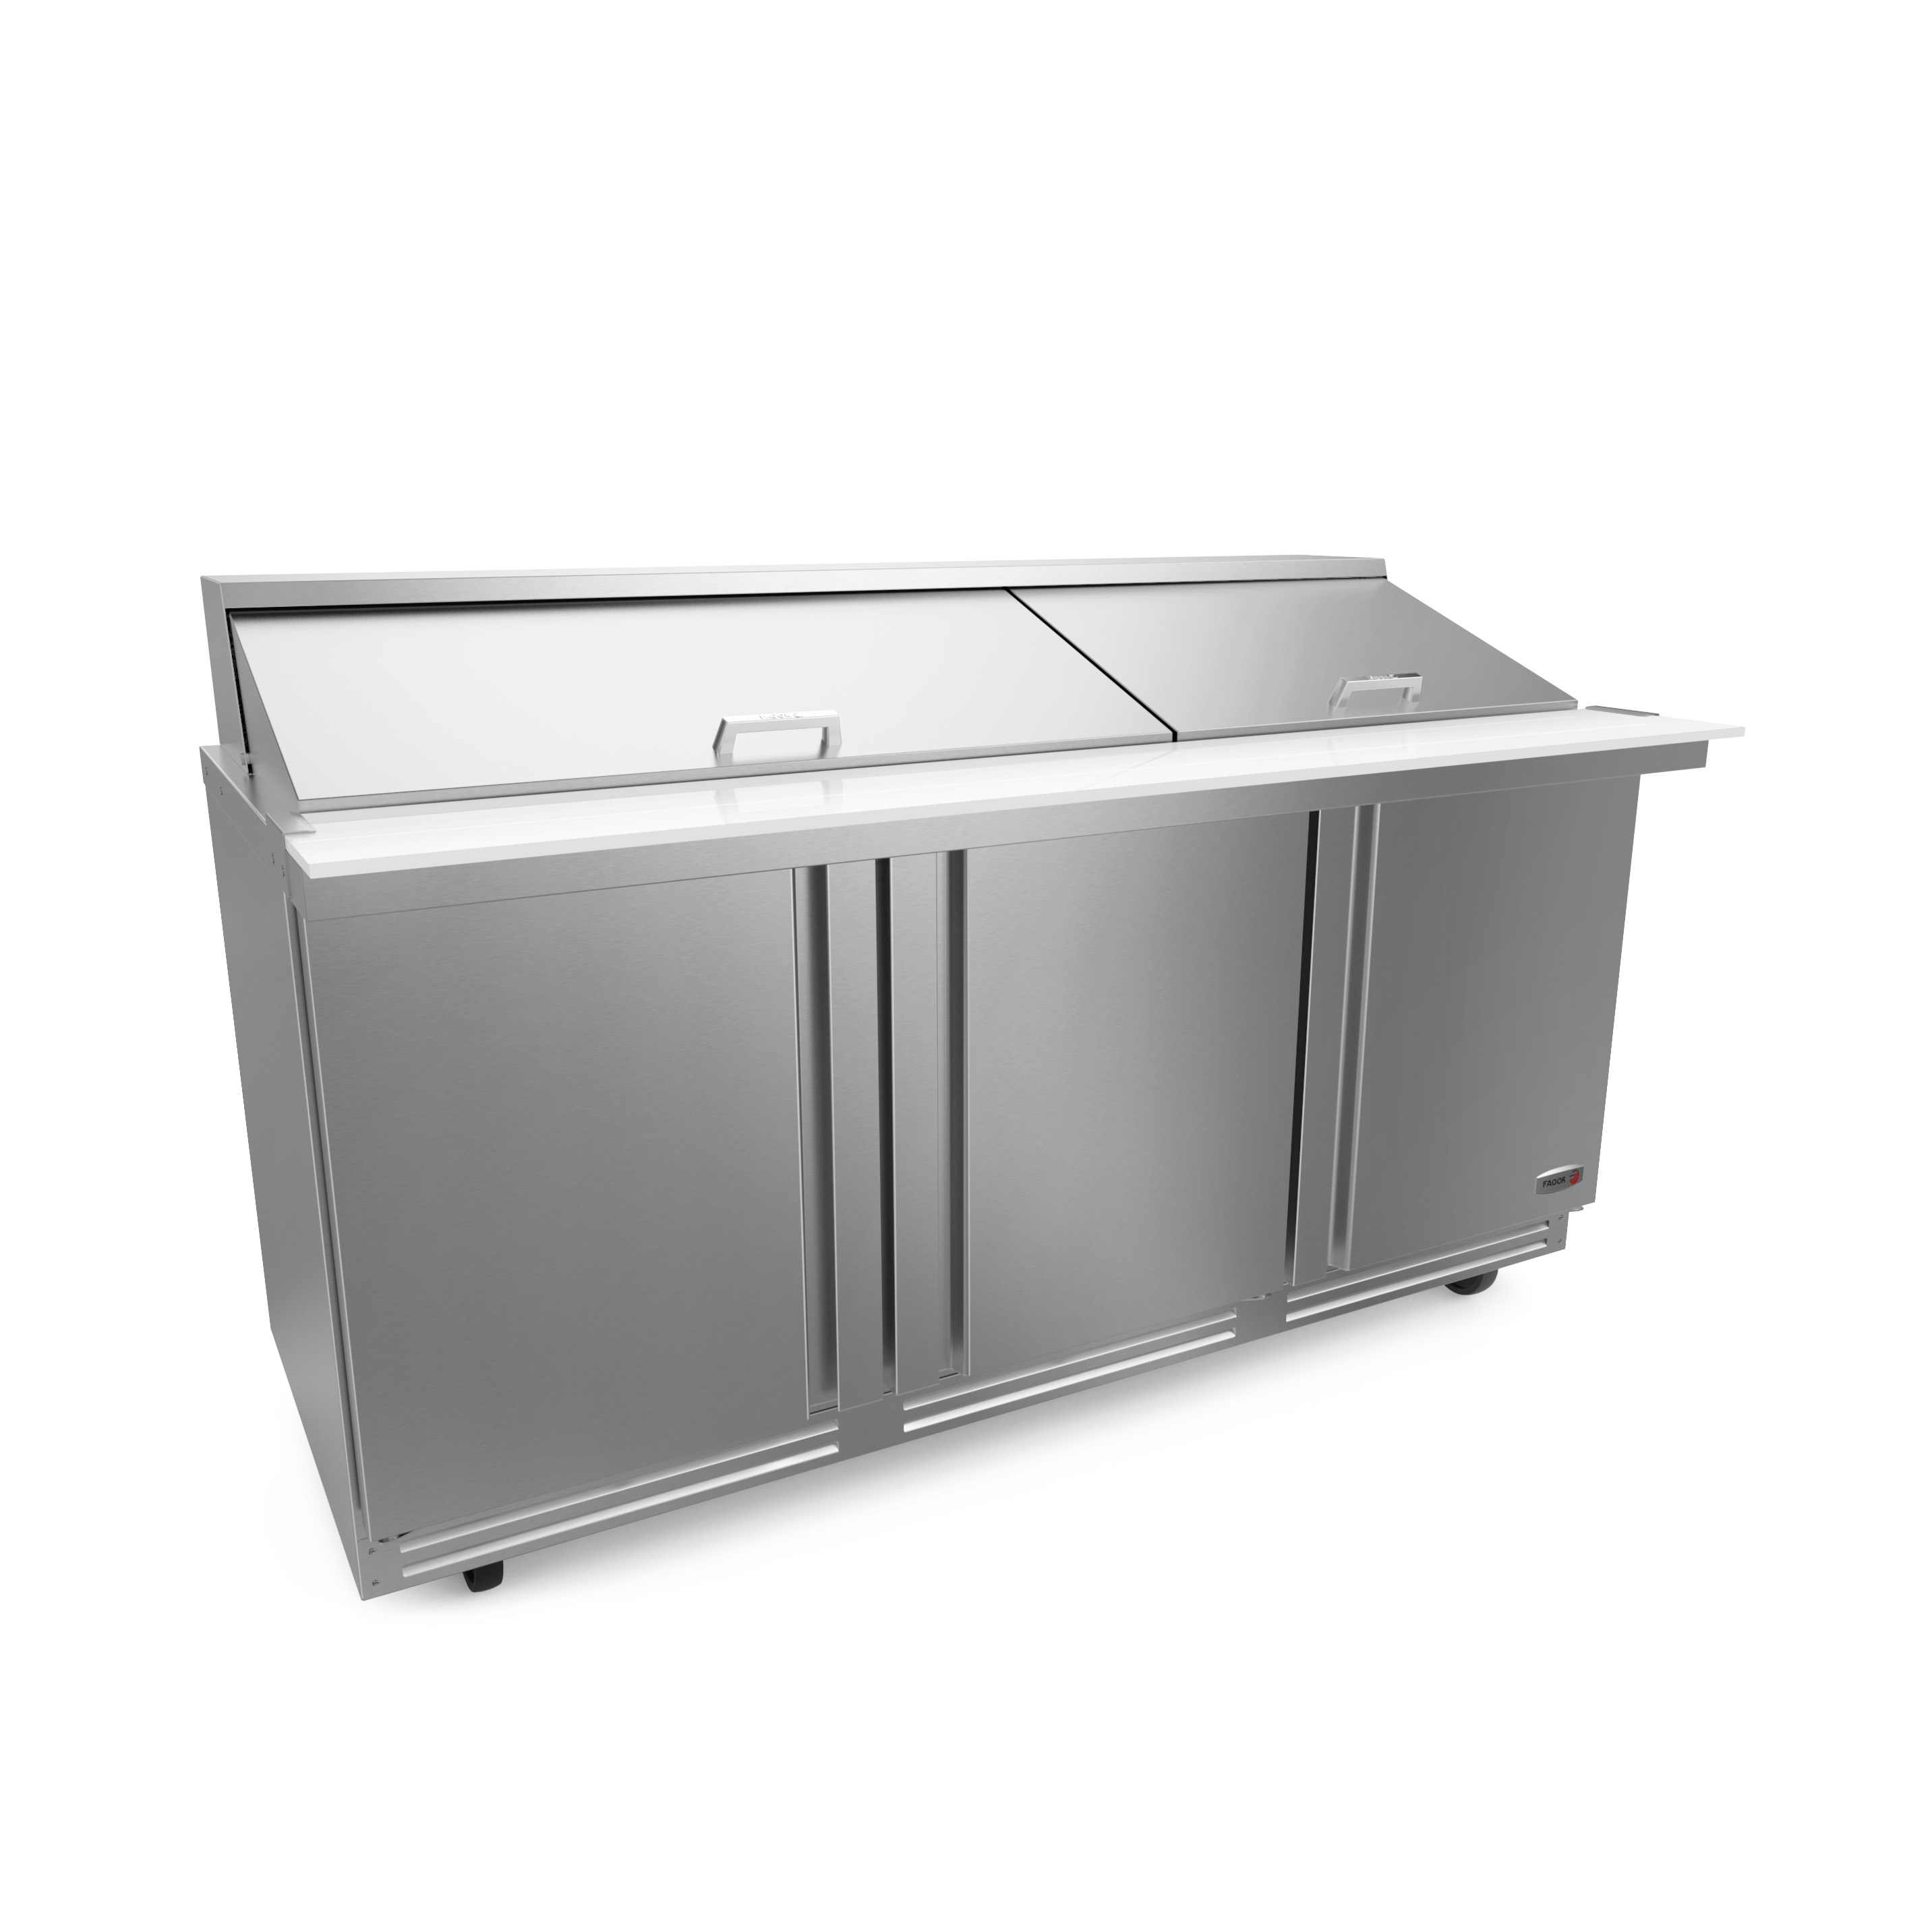 Fagor Refrigeration FMT-72-30-N Mega Top Sandwich / Salad Unit Refrigerated Counter